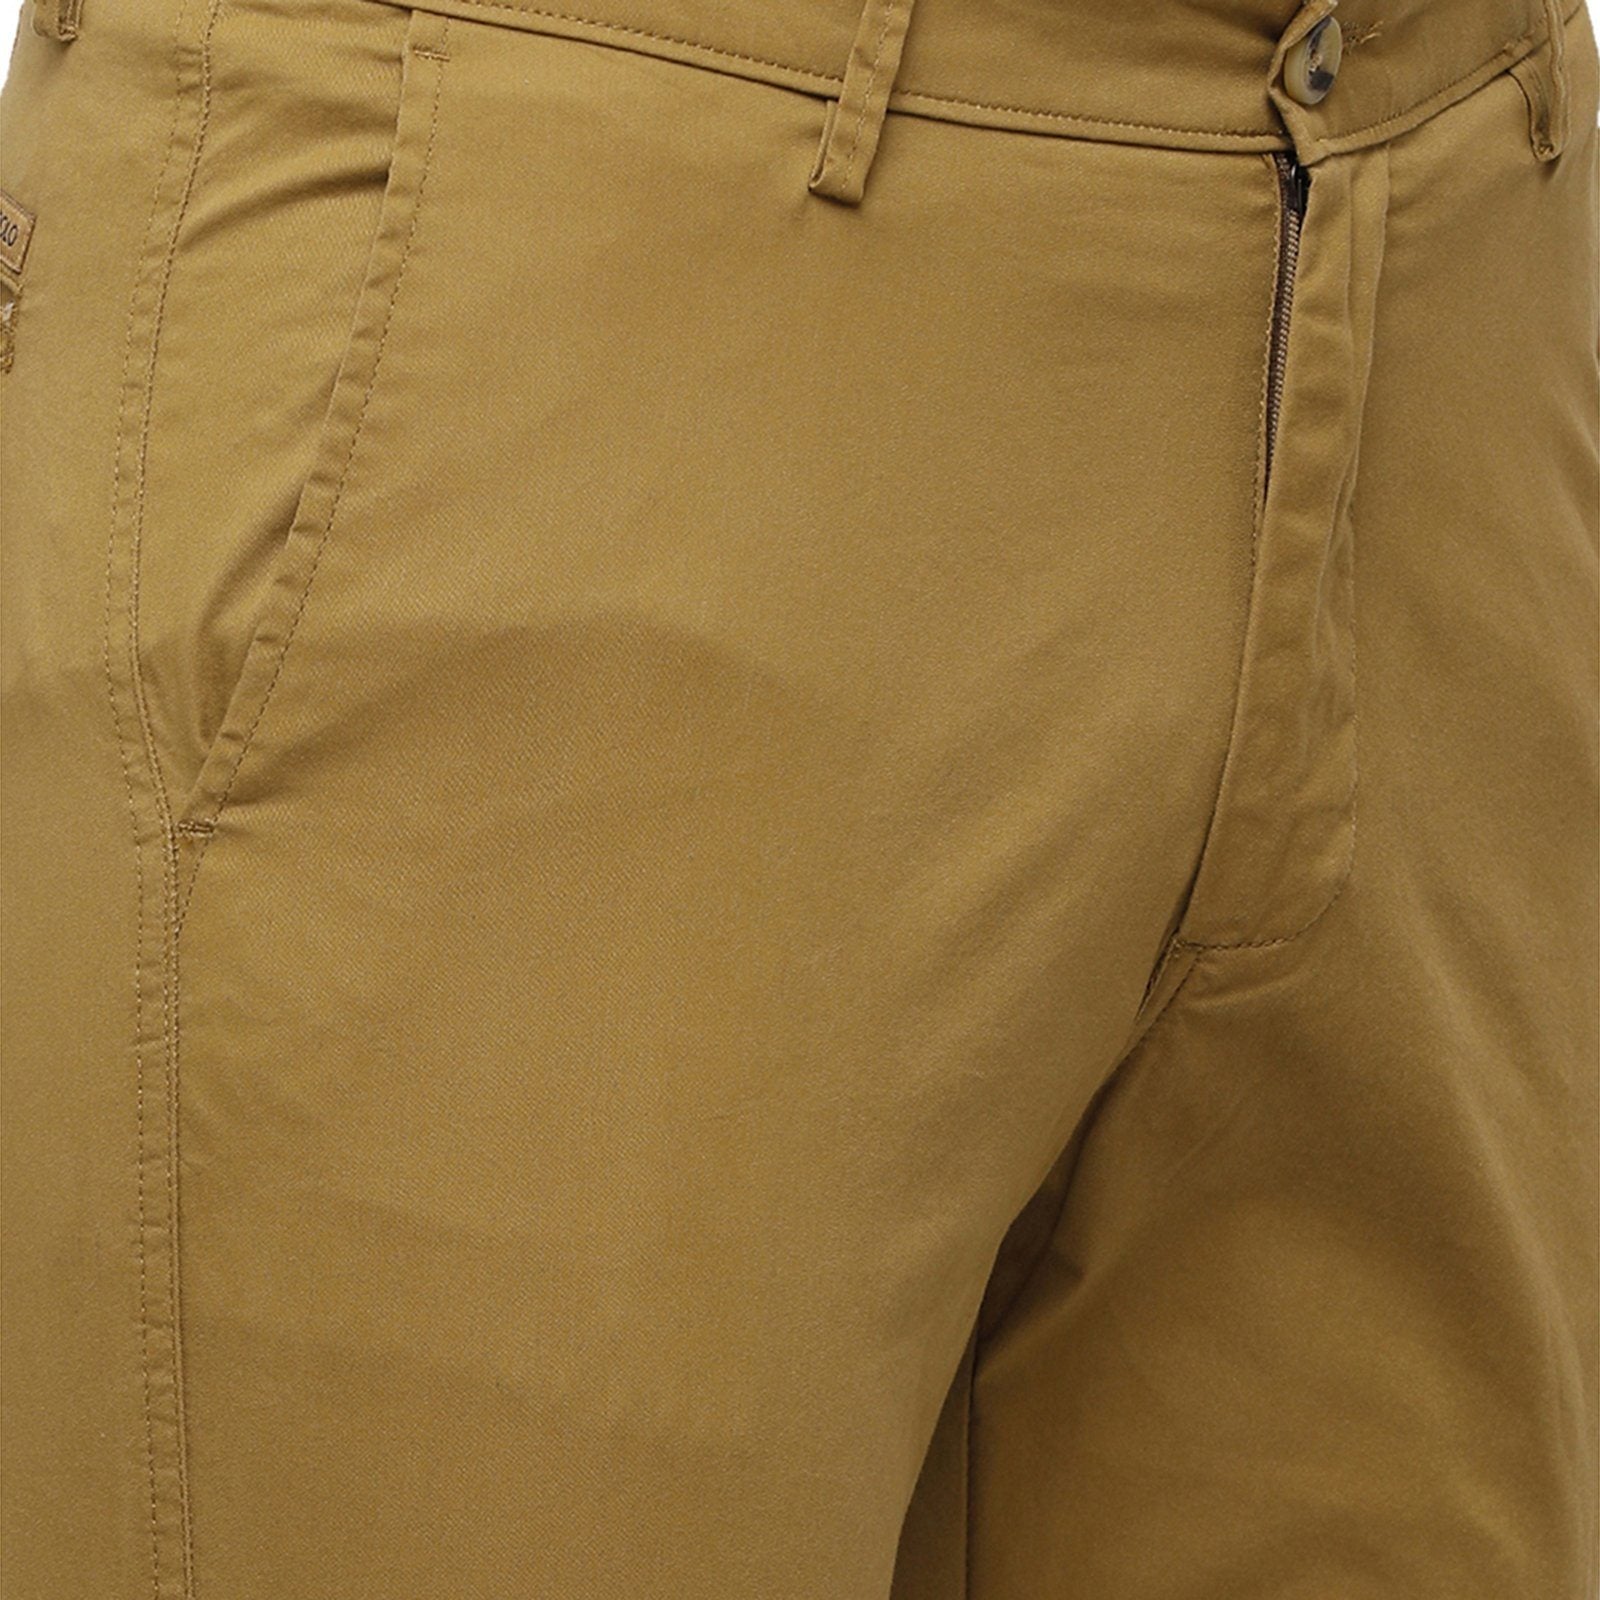 Classic Polo Men's Slim Fit Bottom Bottom Solid Cotton Blend Khaki Trousers TM1-28 A-KHA-SL-LY classic polo trousers Classic Polo 